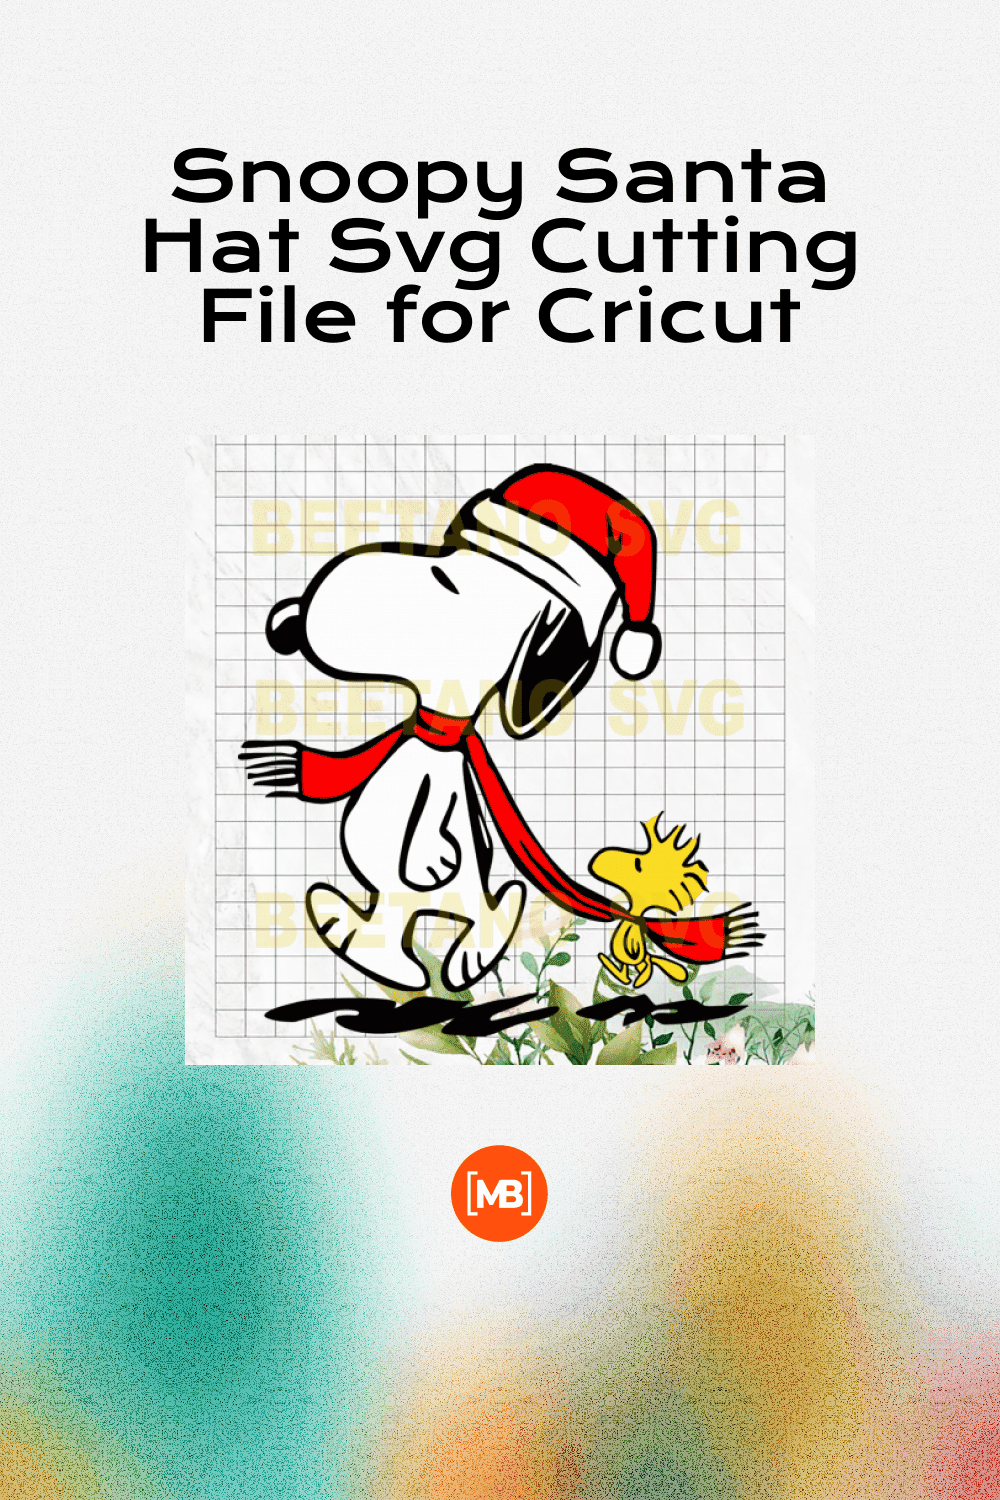 Snoopy Santa Hat Svg Cutting File for Cricut.